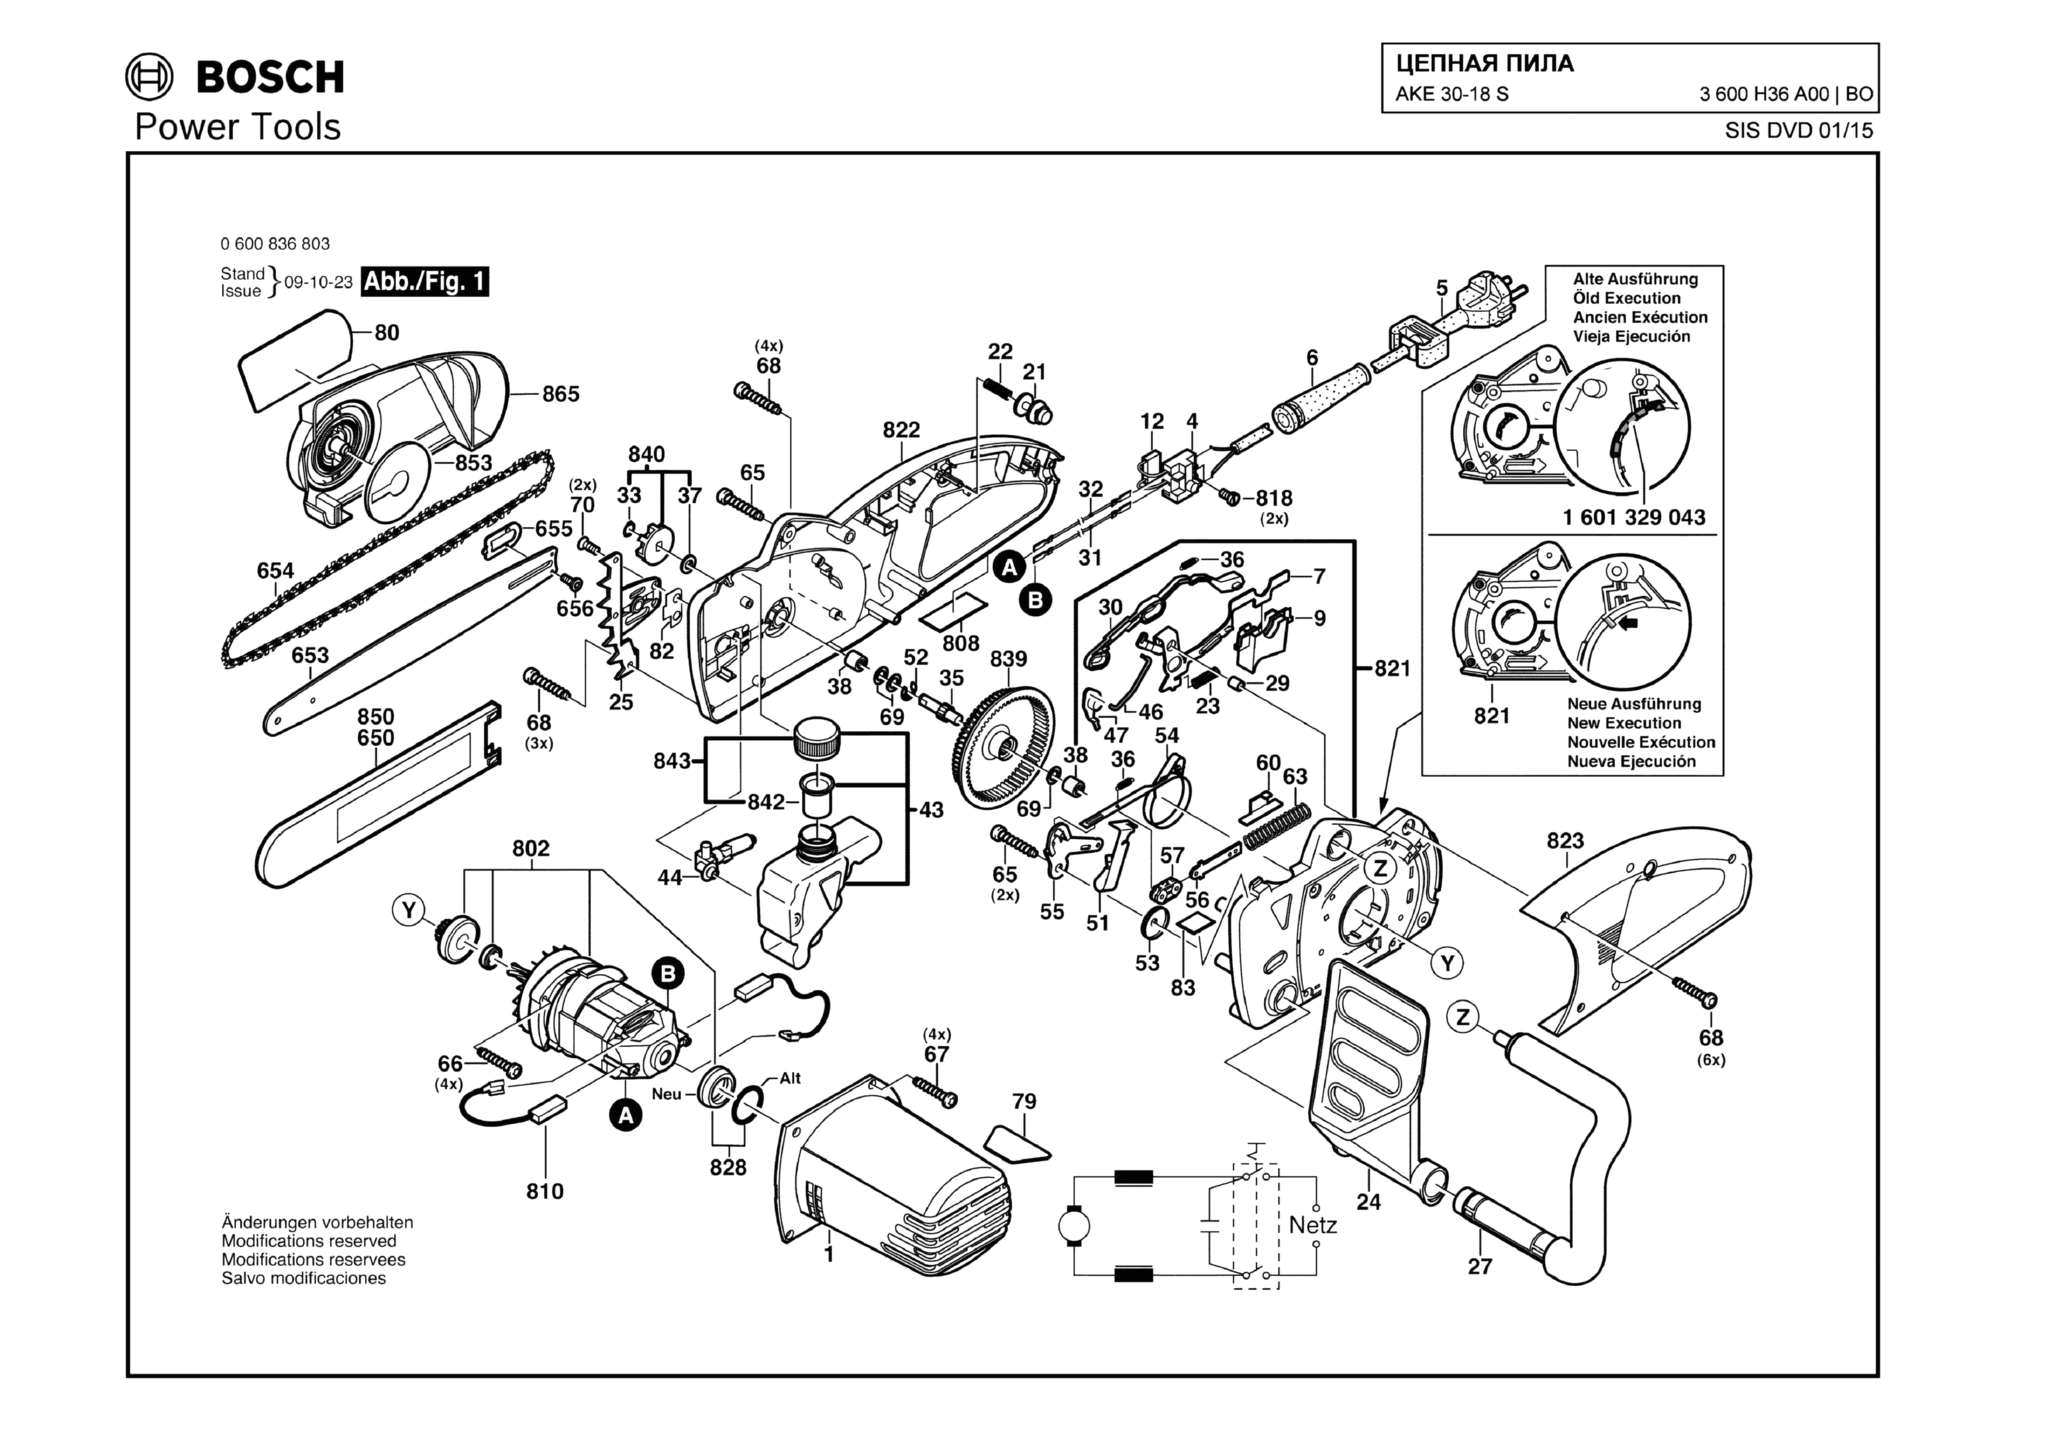 Запчасти, схема и деталировка Bosch AKE 30-18 S (ТИП 3600H36A00)